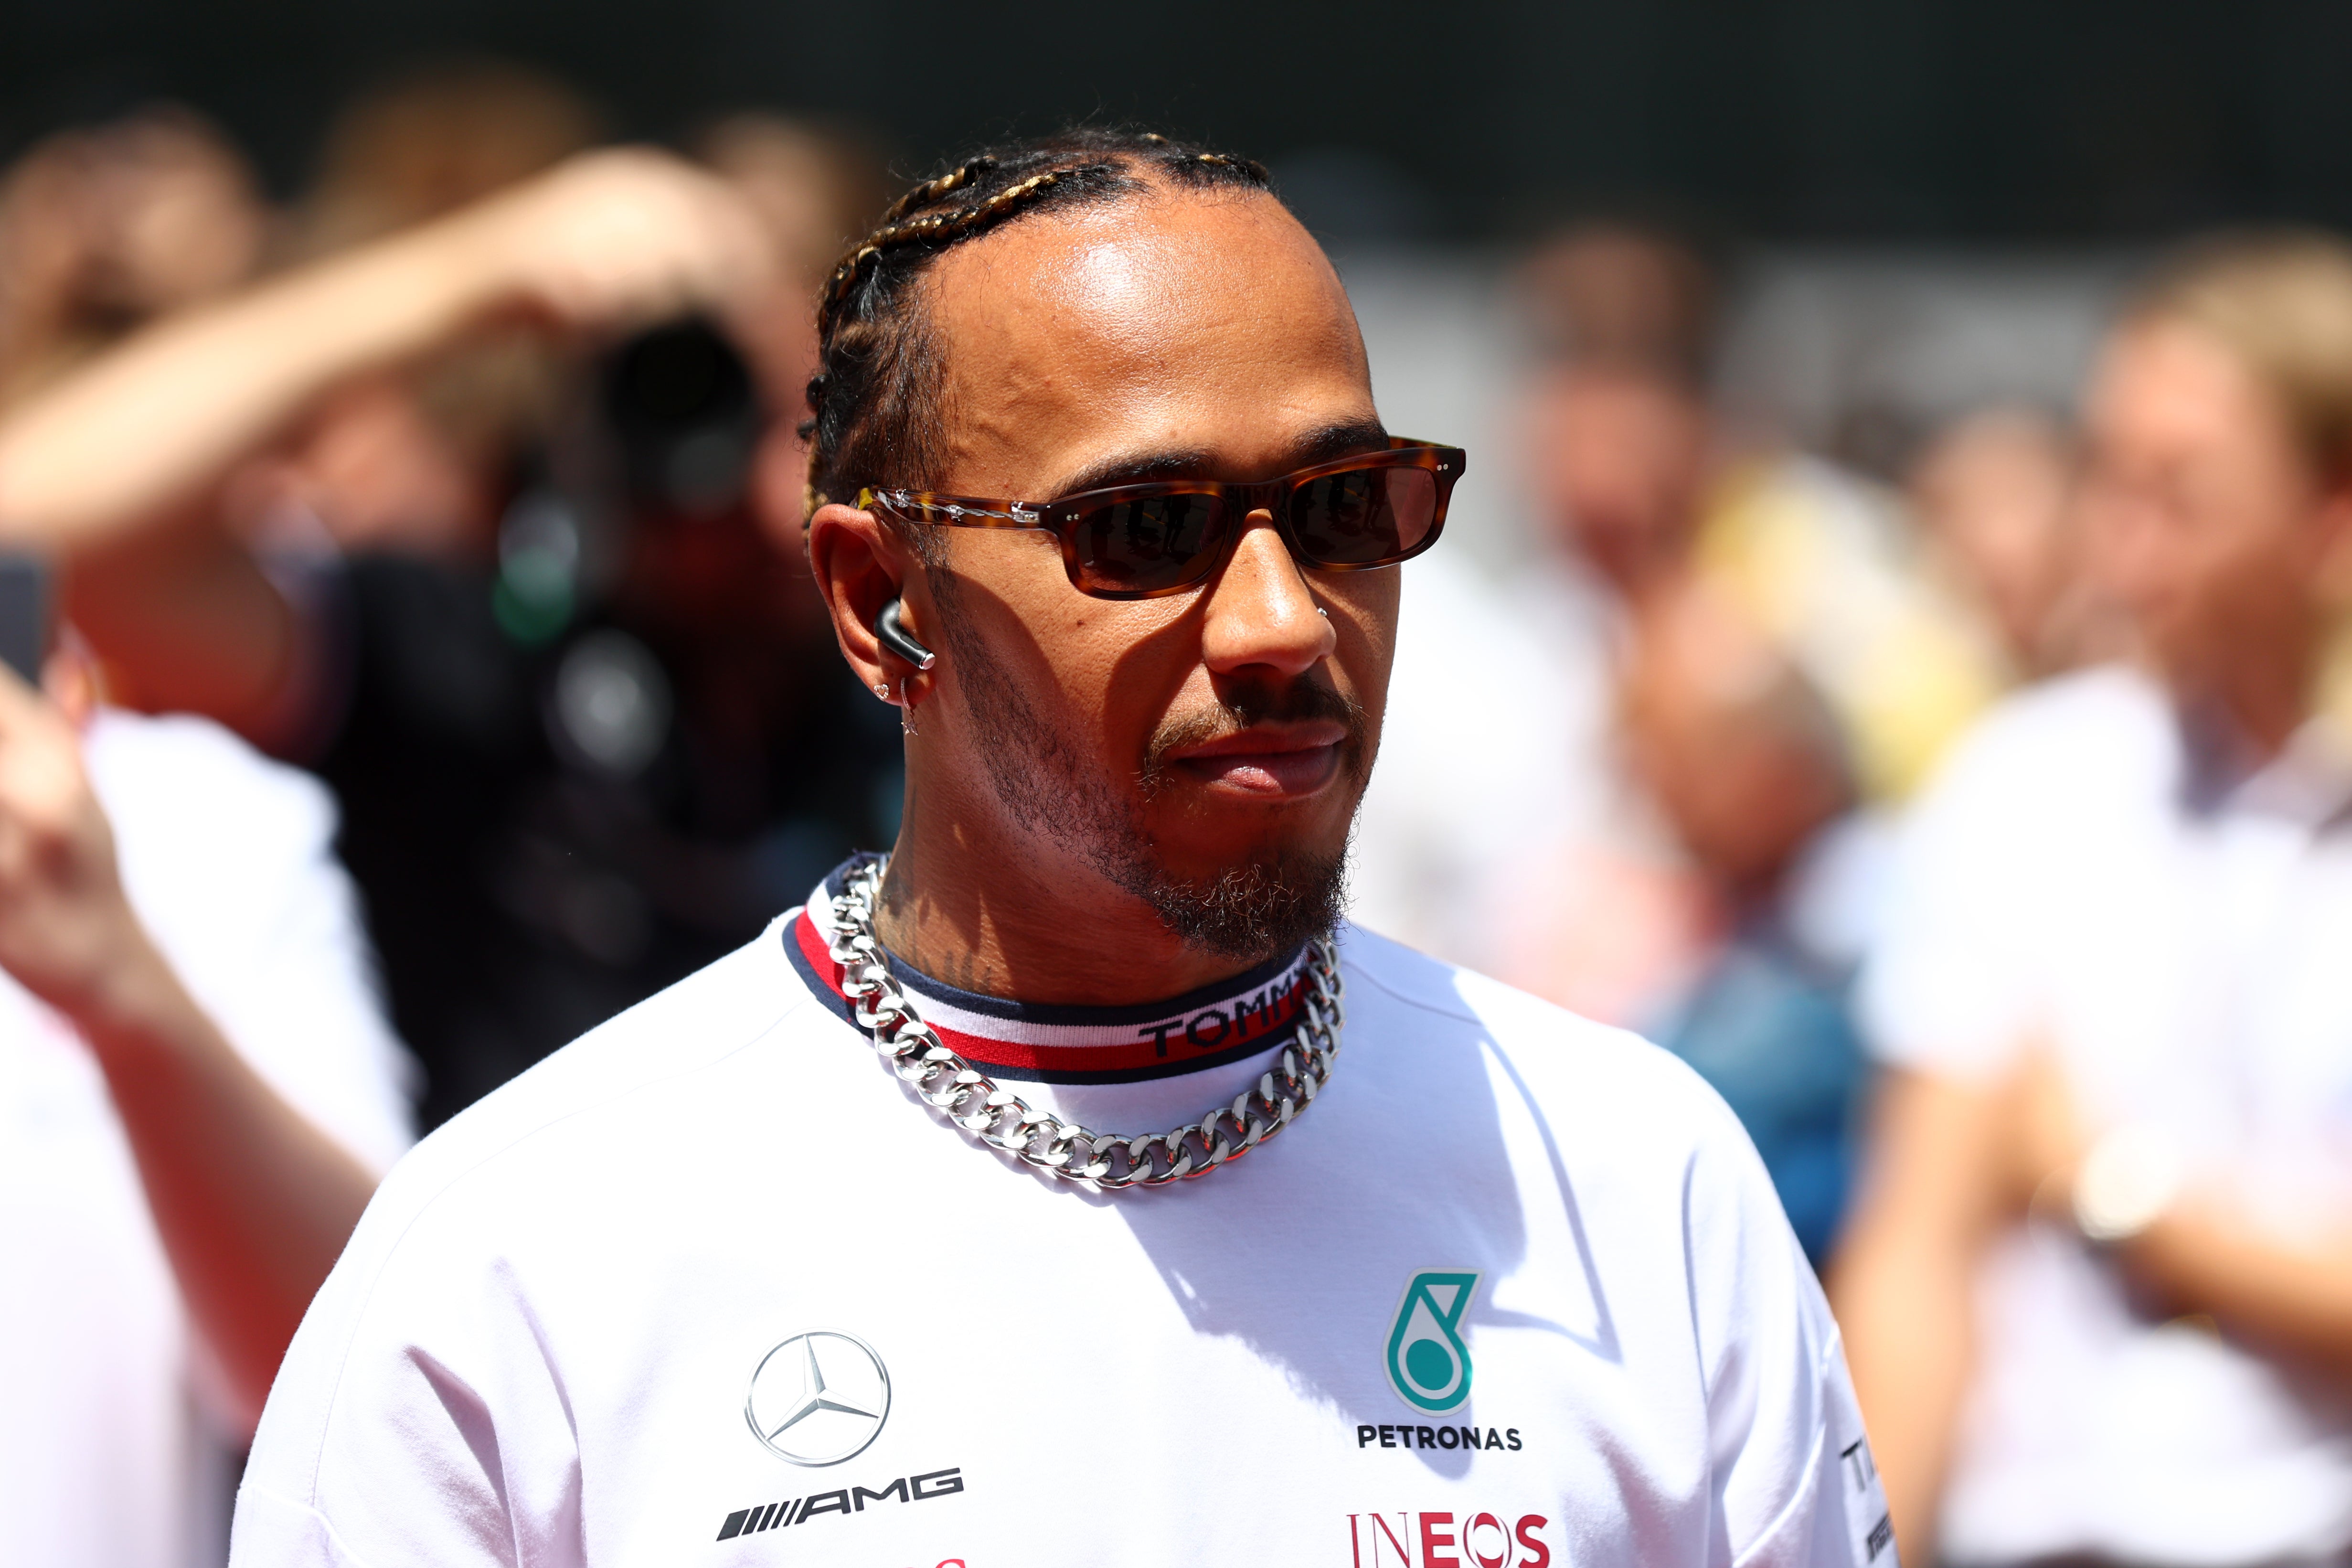 Hamilton finished fifth at Spanish Grand Prix